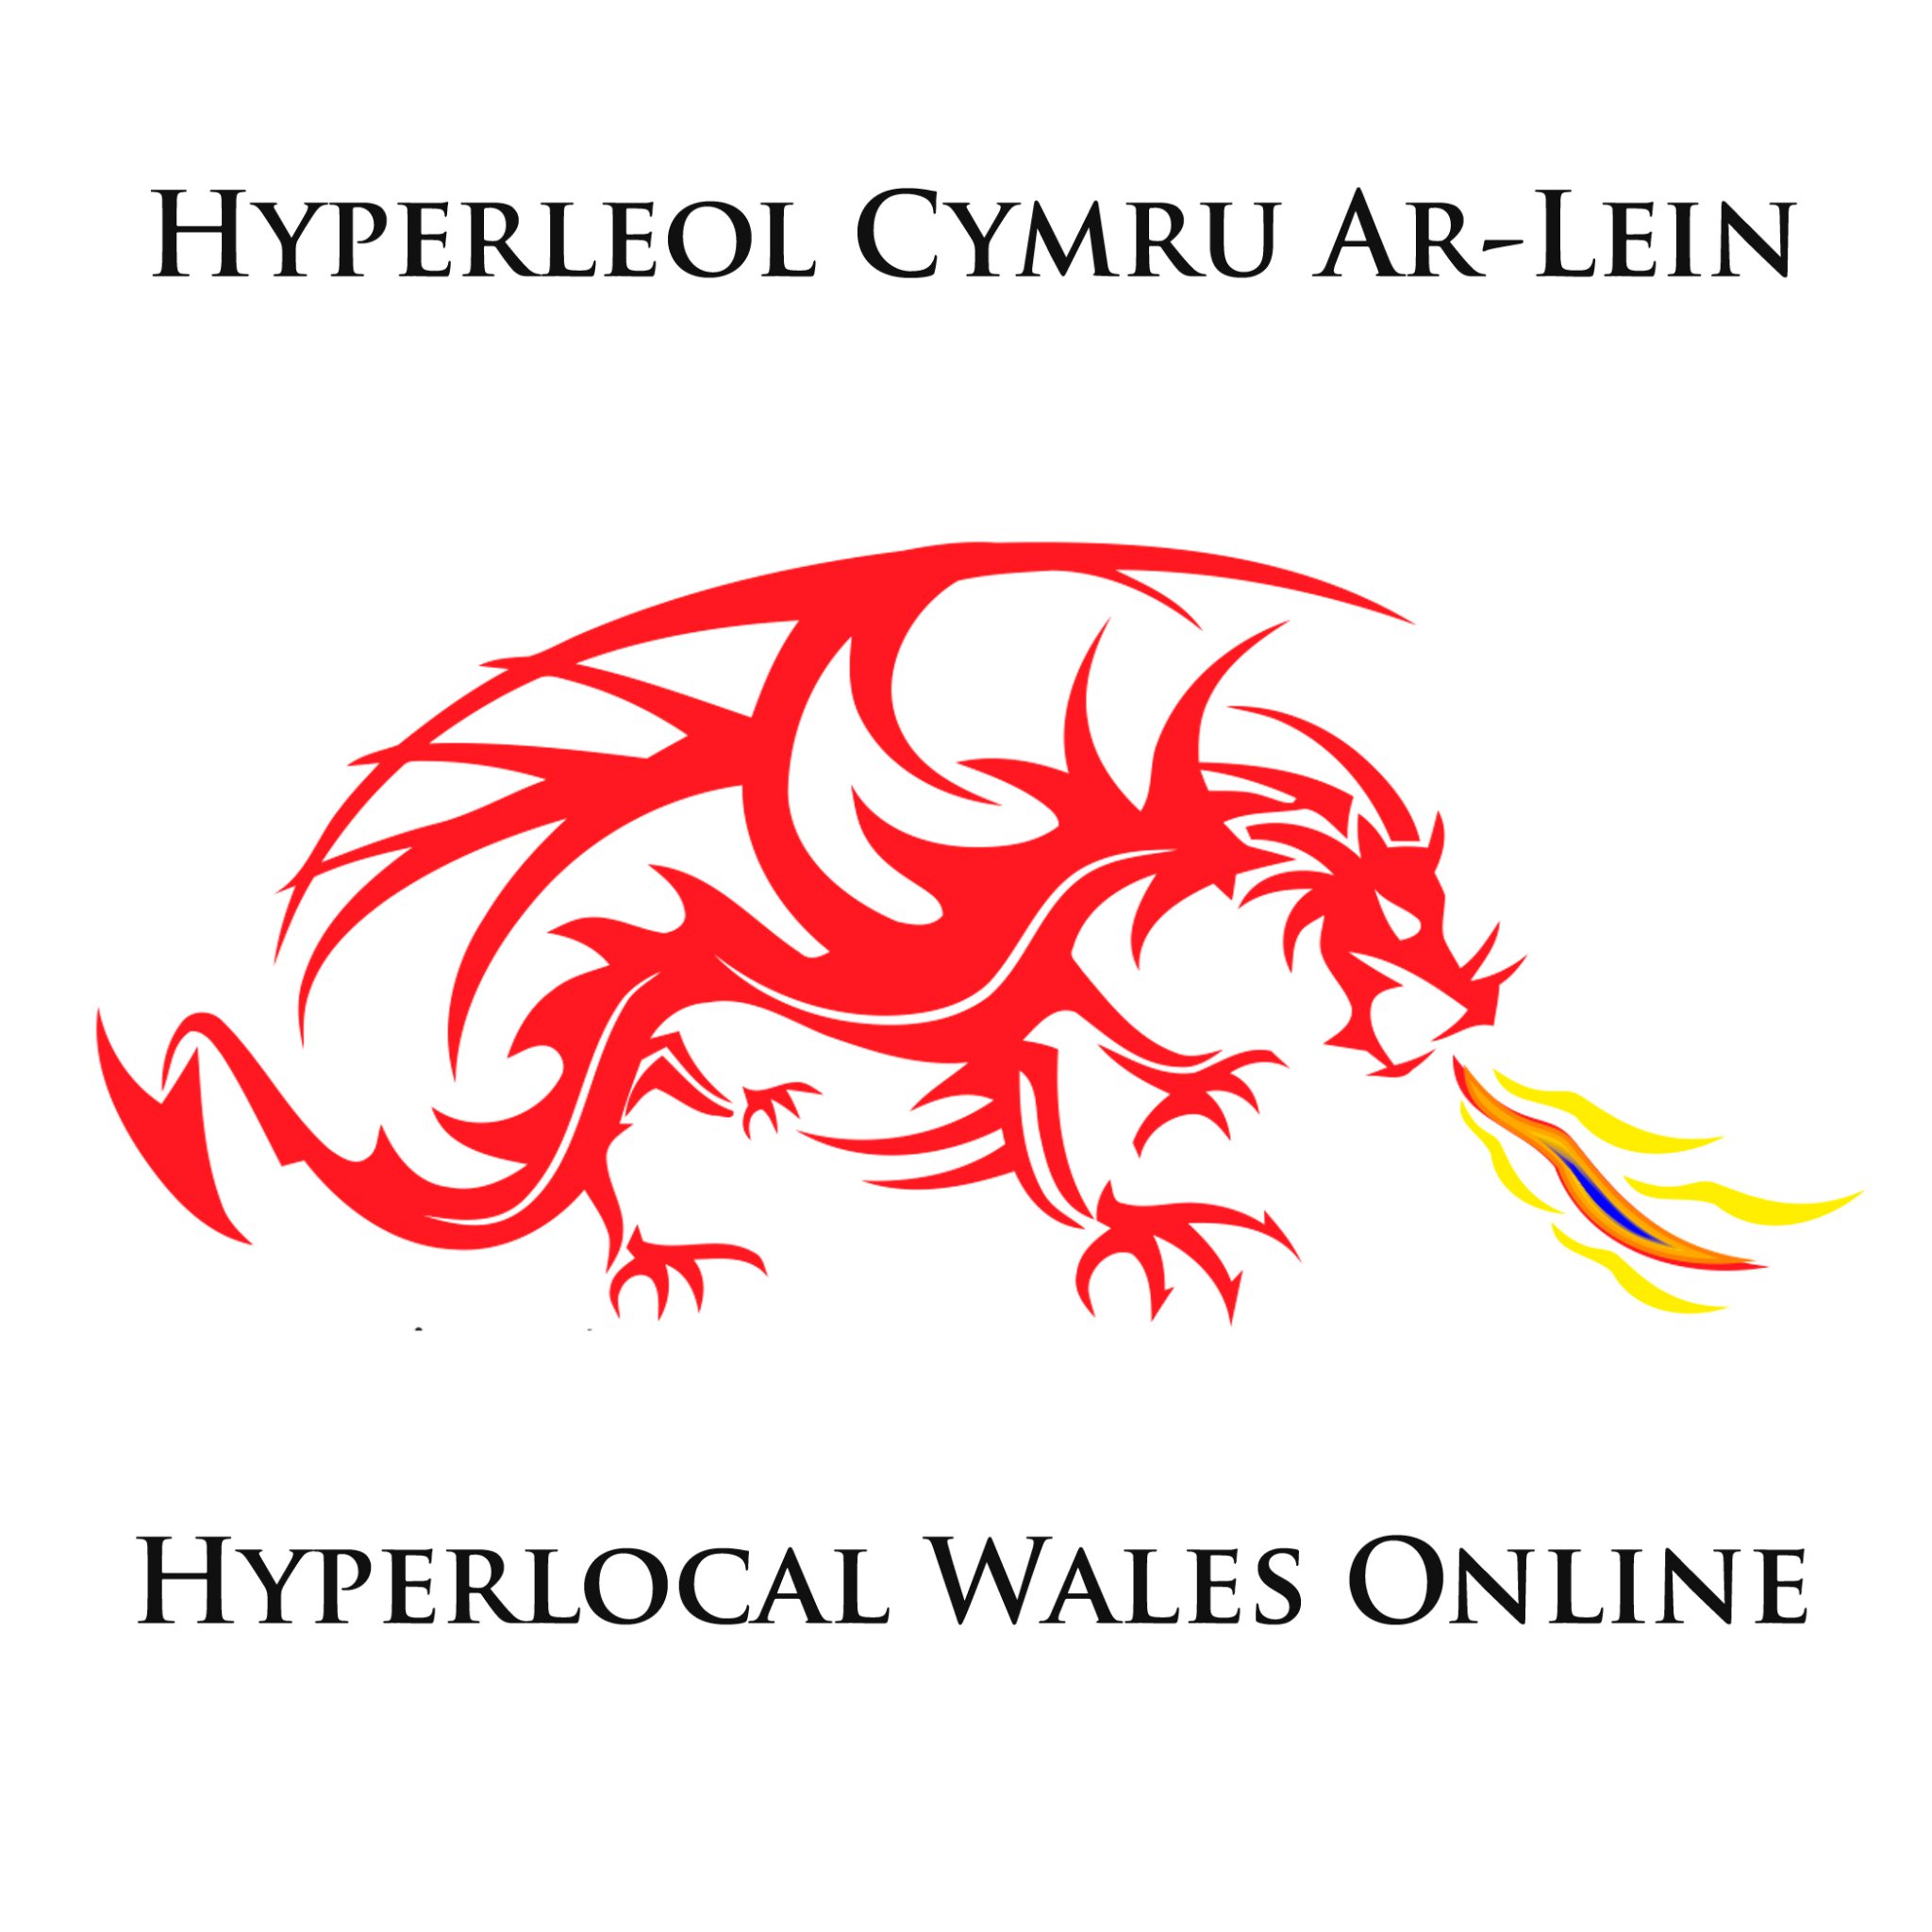 Hyperlocal news website covering Wales. News, Politics, Business, Sport, Events